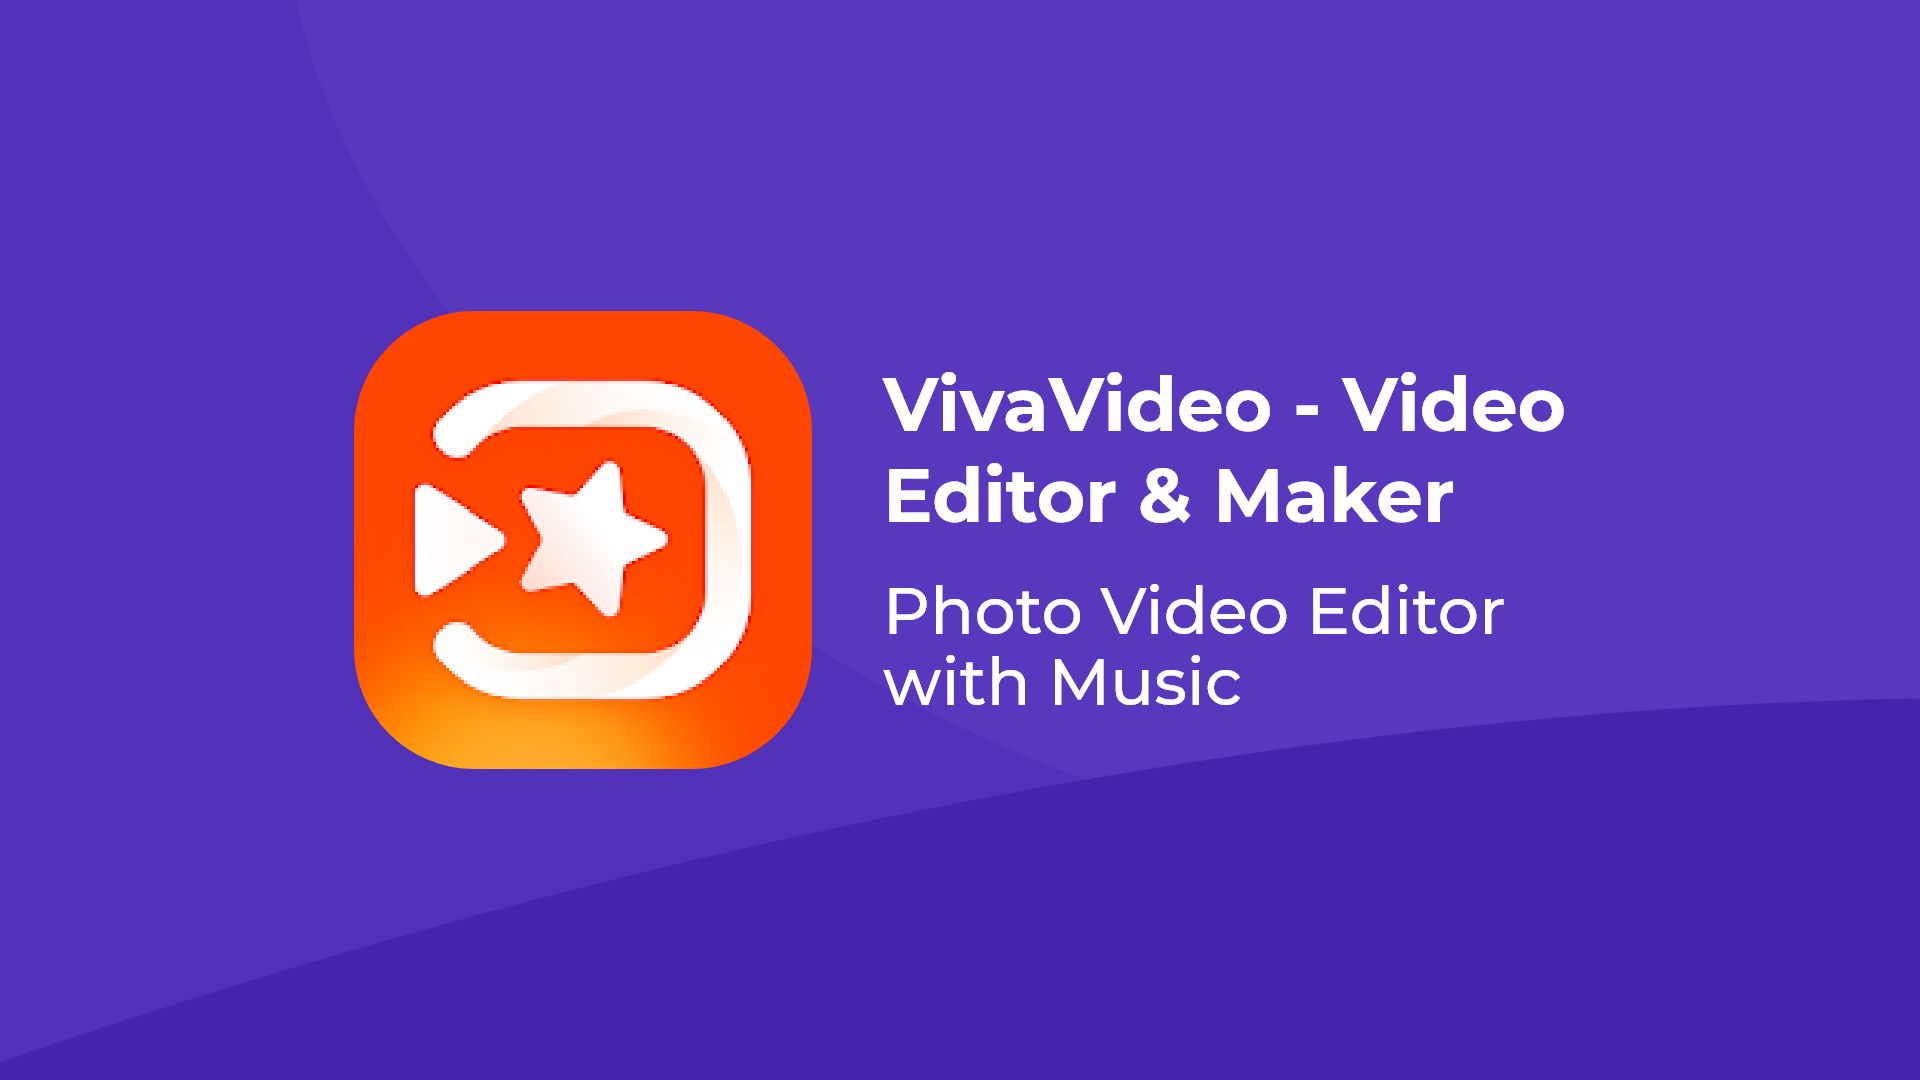 Viva Video app logo and screen